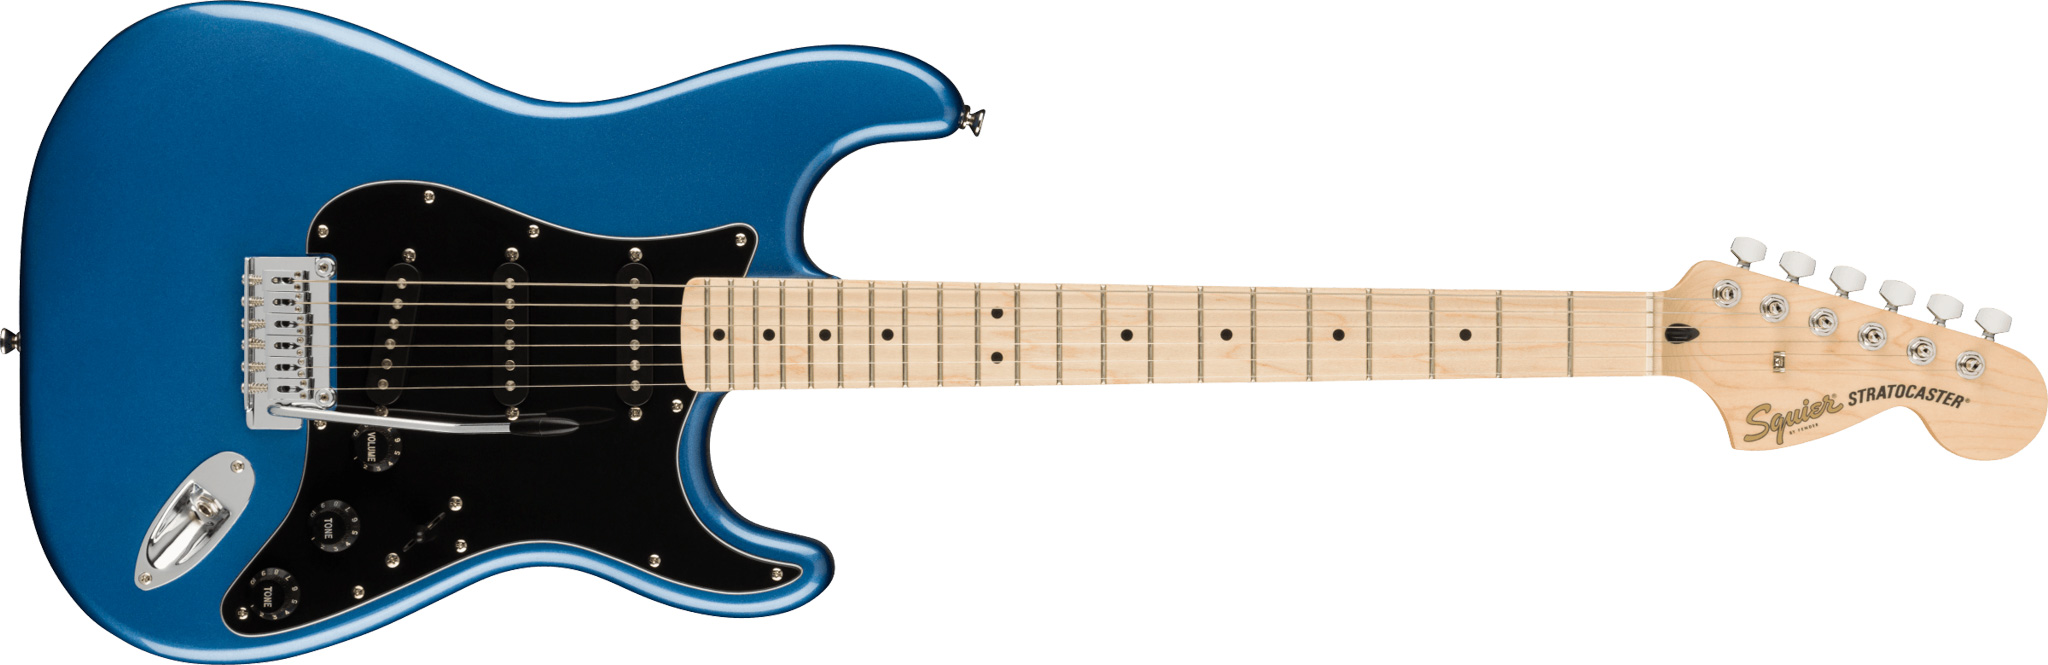 Fender Squier Affinity Stratocaster elektrisk gitar